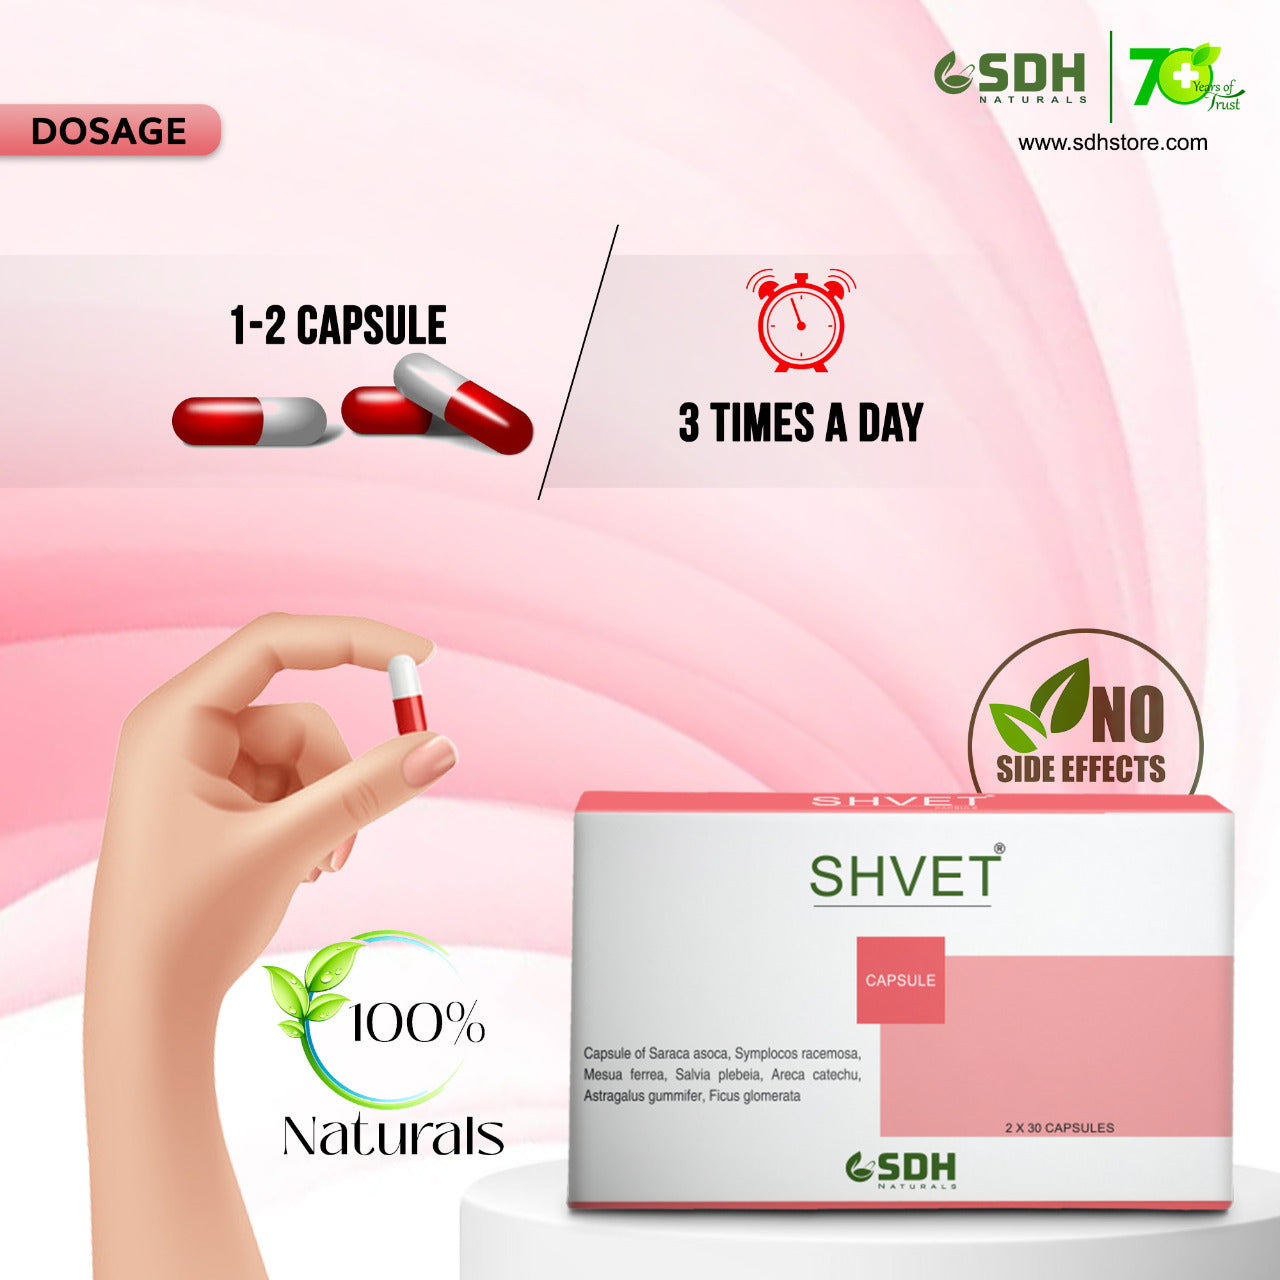 Shvet Capsule - Best Women Wellness Supplement